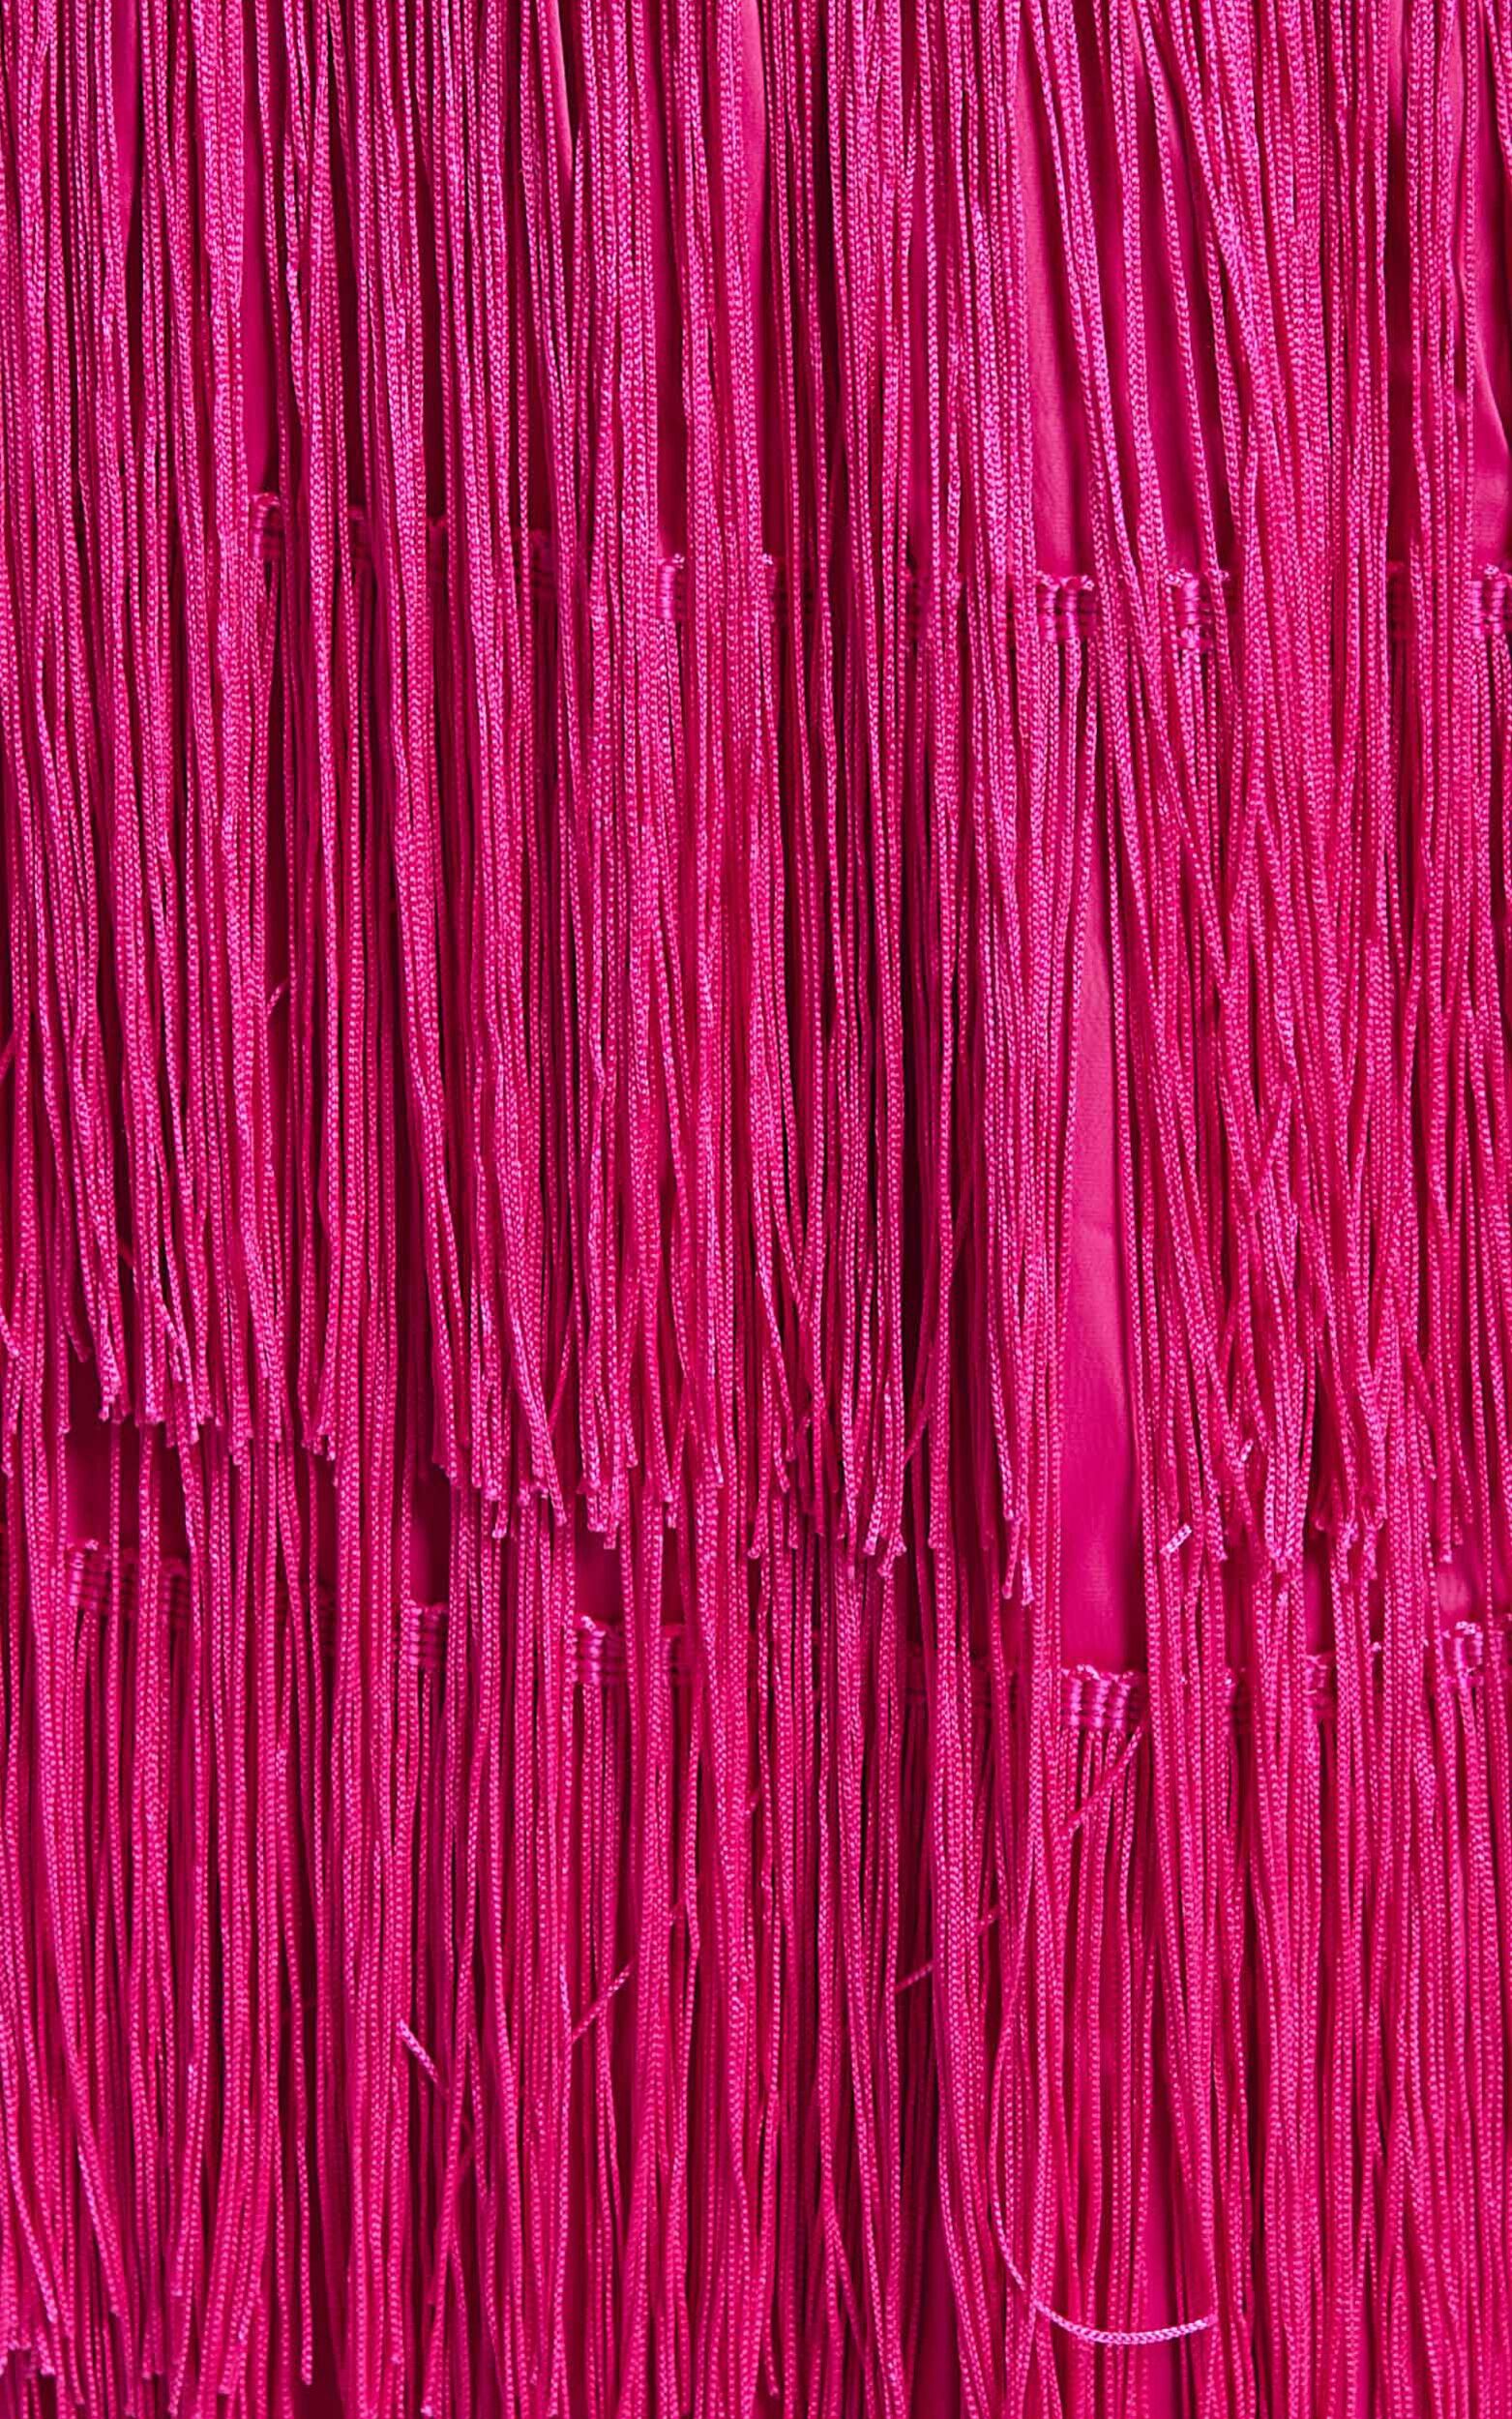 Pink Fringe Curtain